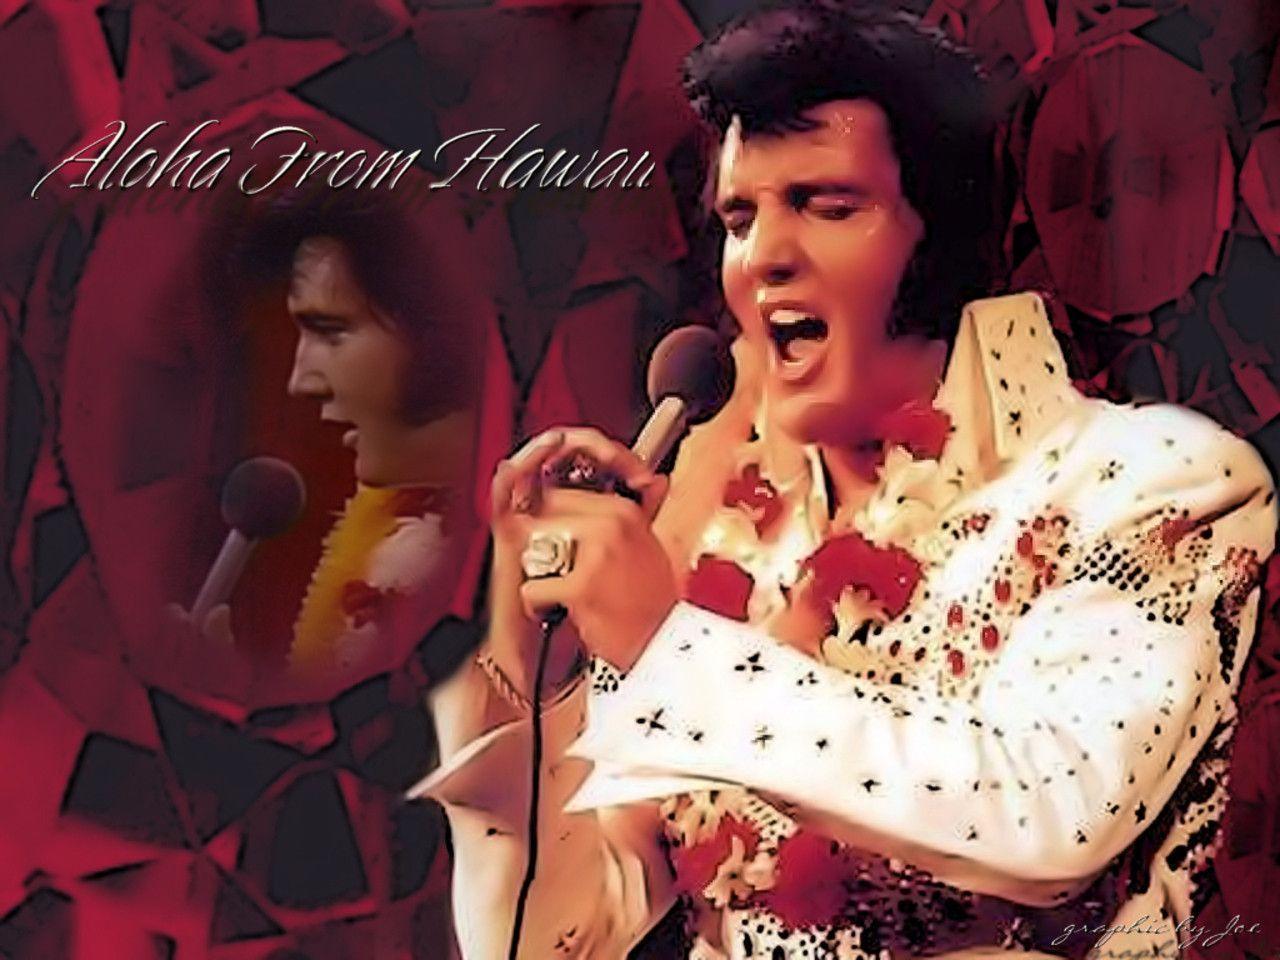 Free Elvis Presley wallpaper. Elvis Presley wallpaper